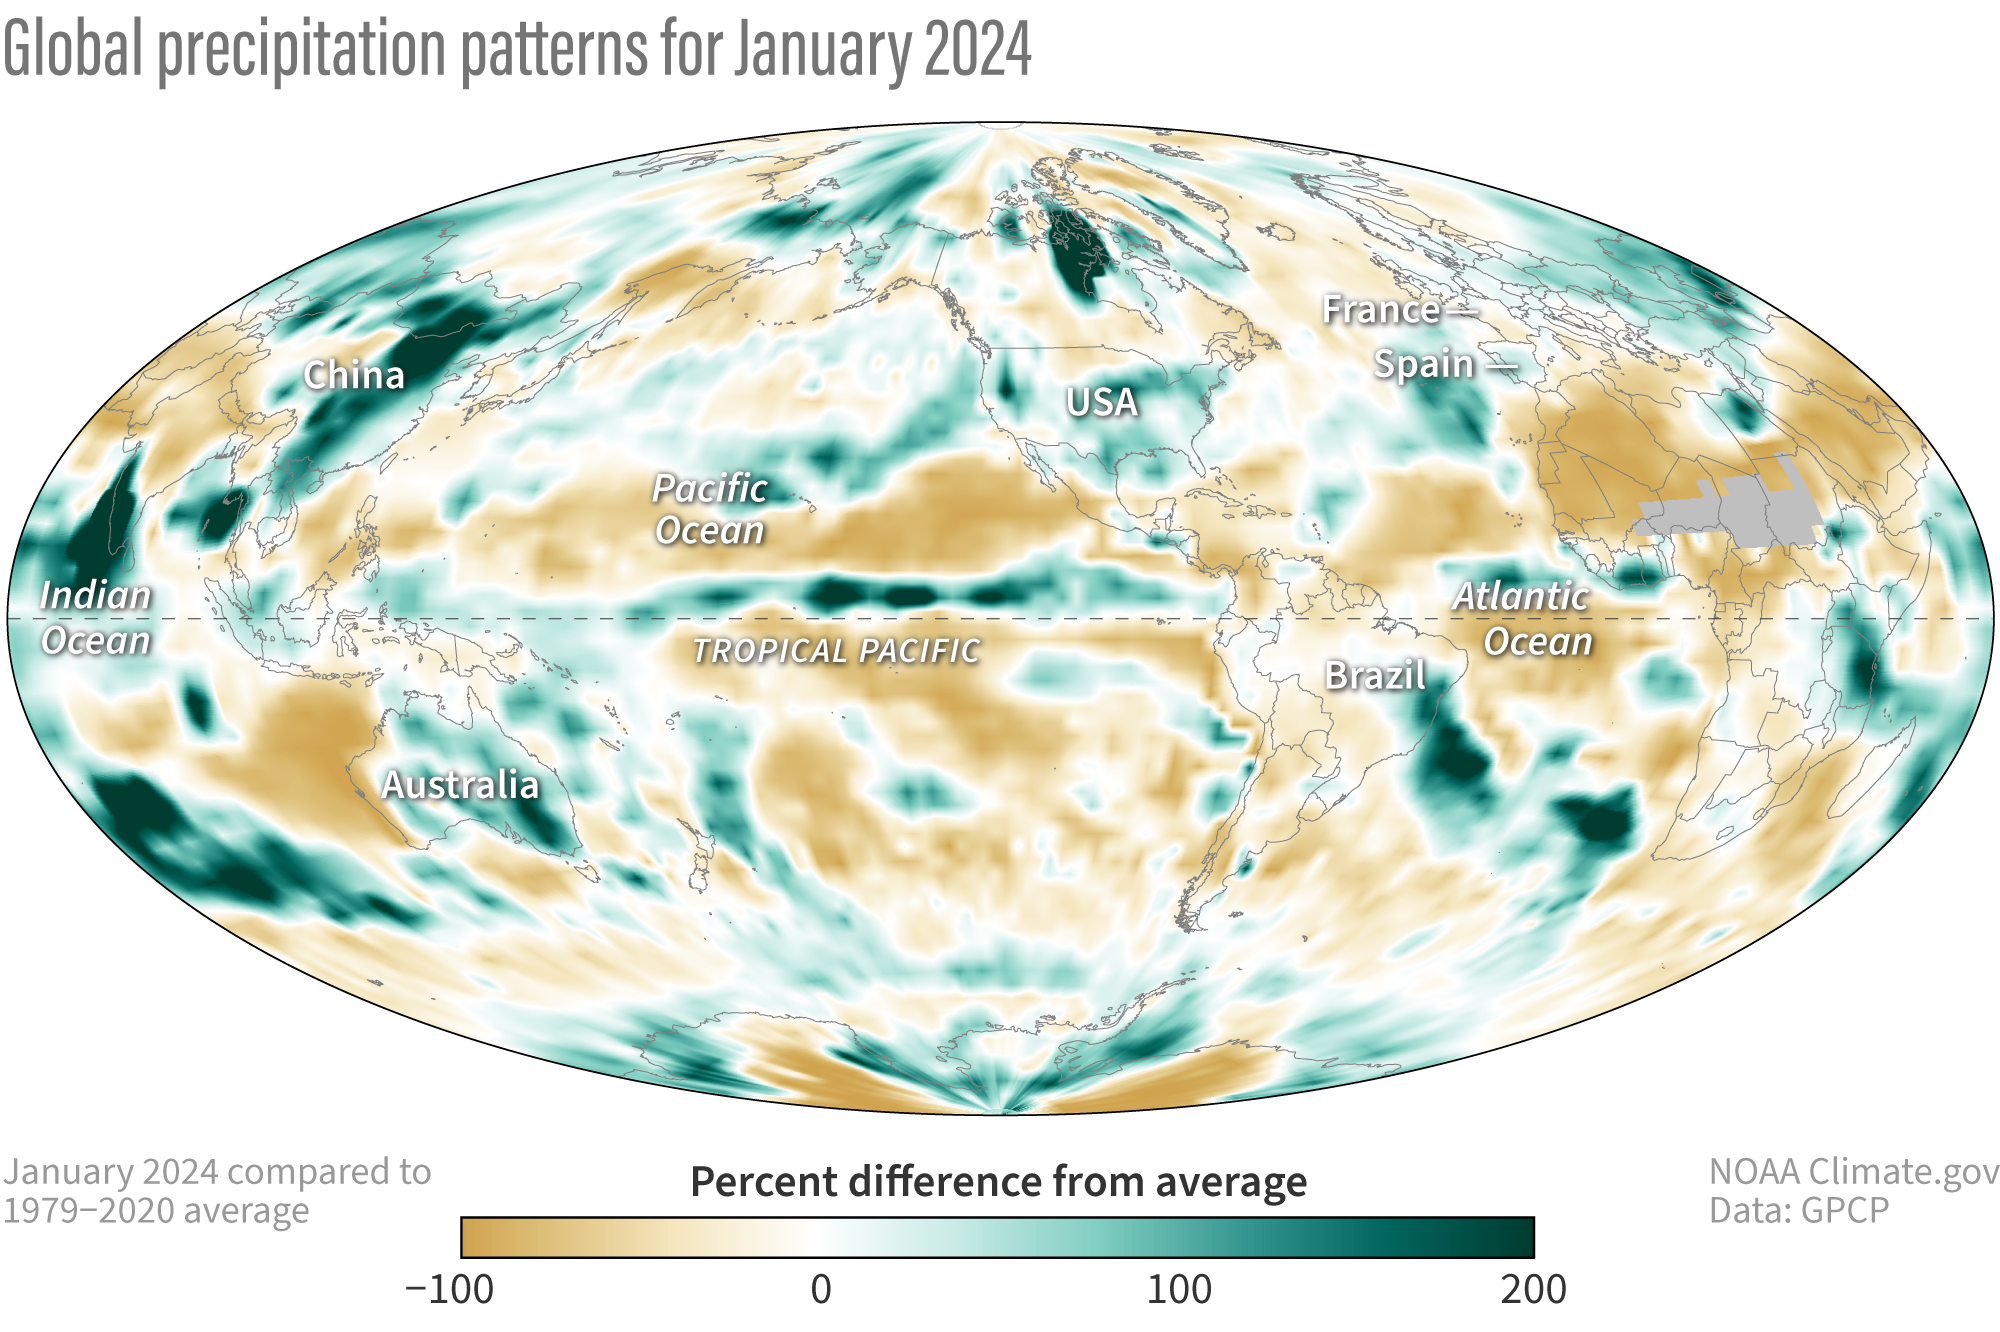 Jan2024_precip_percentdiff.png NOAA Climate.gov